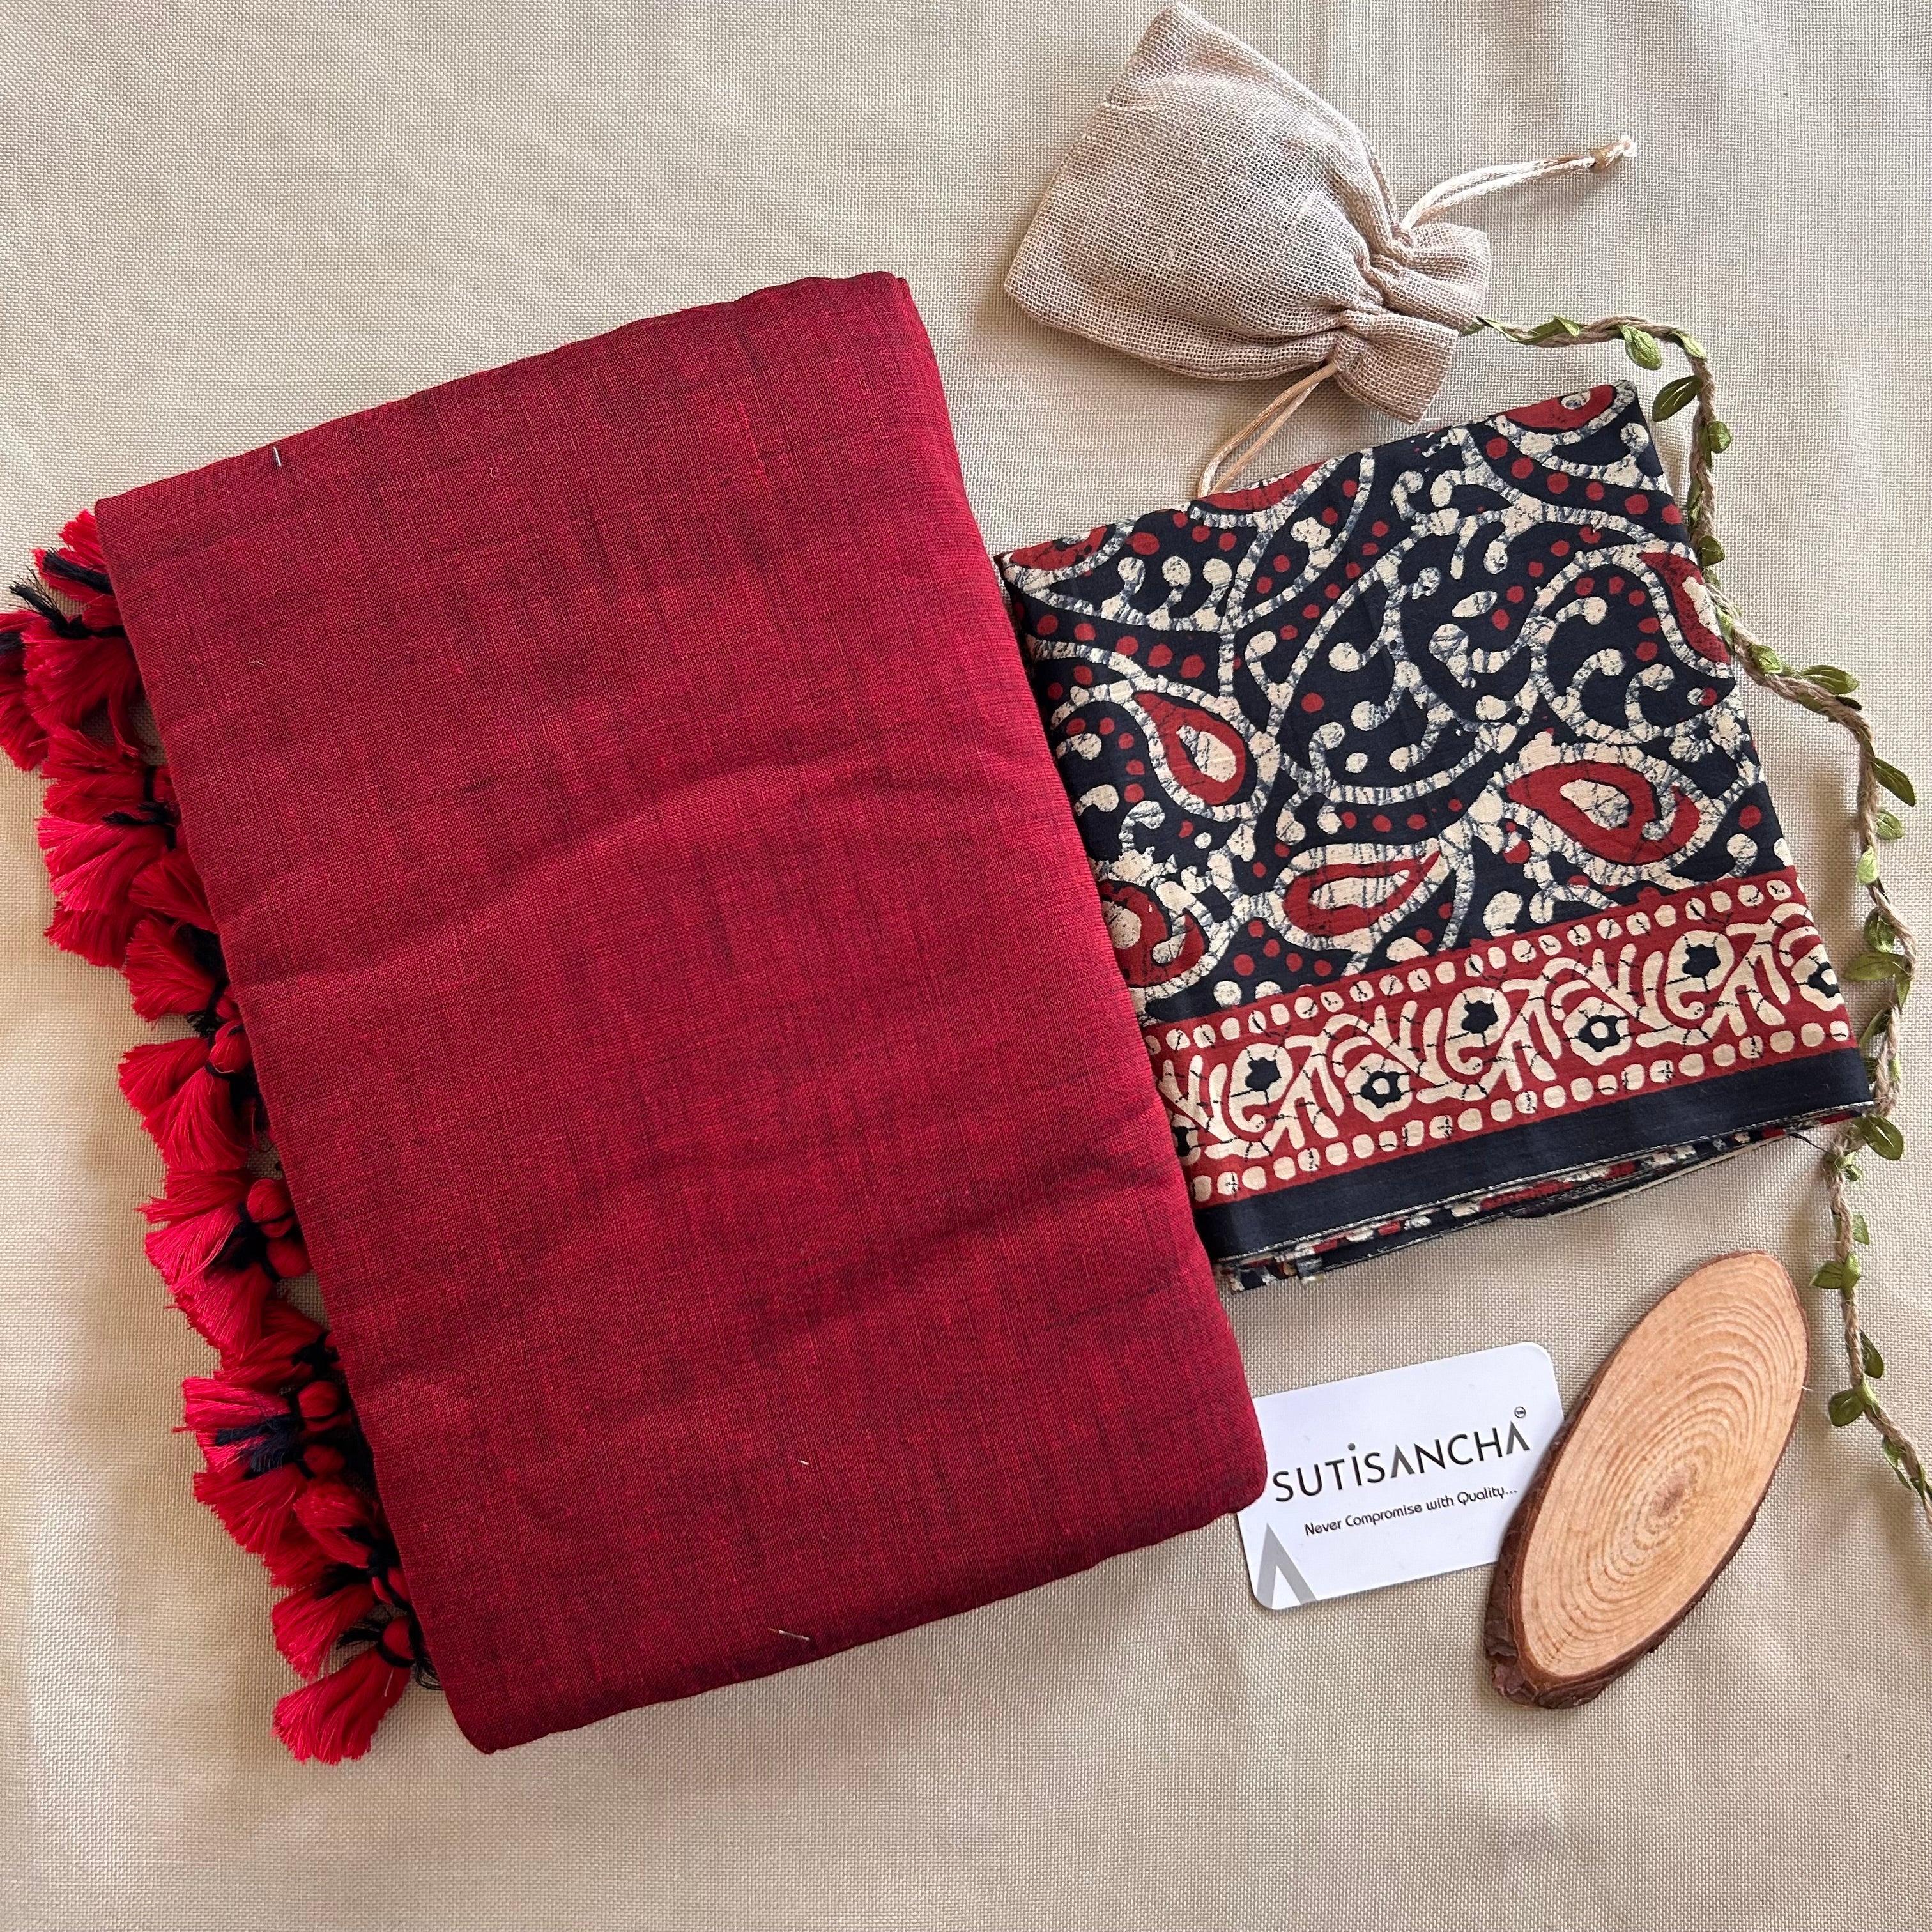 Sutisancha RustRed Handloom Cotton Saree & Designer Blouse